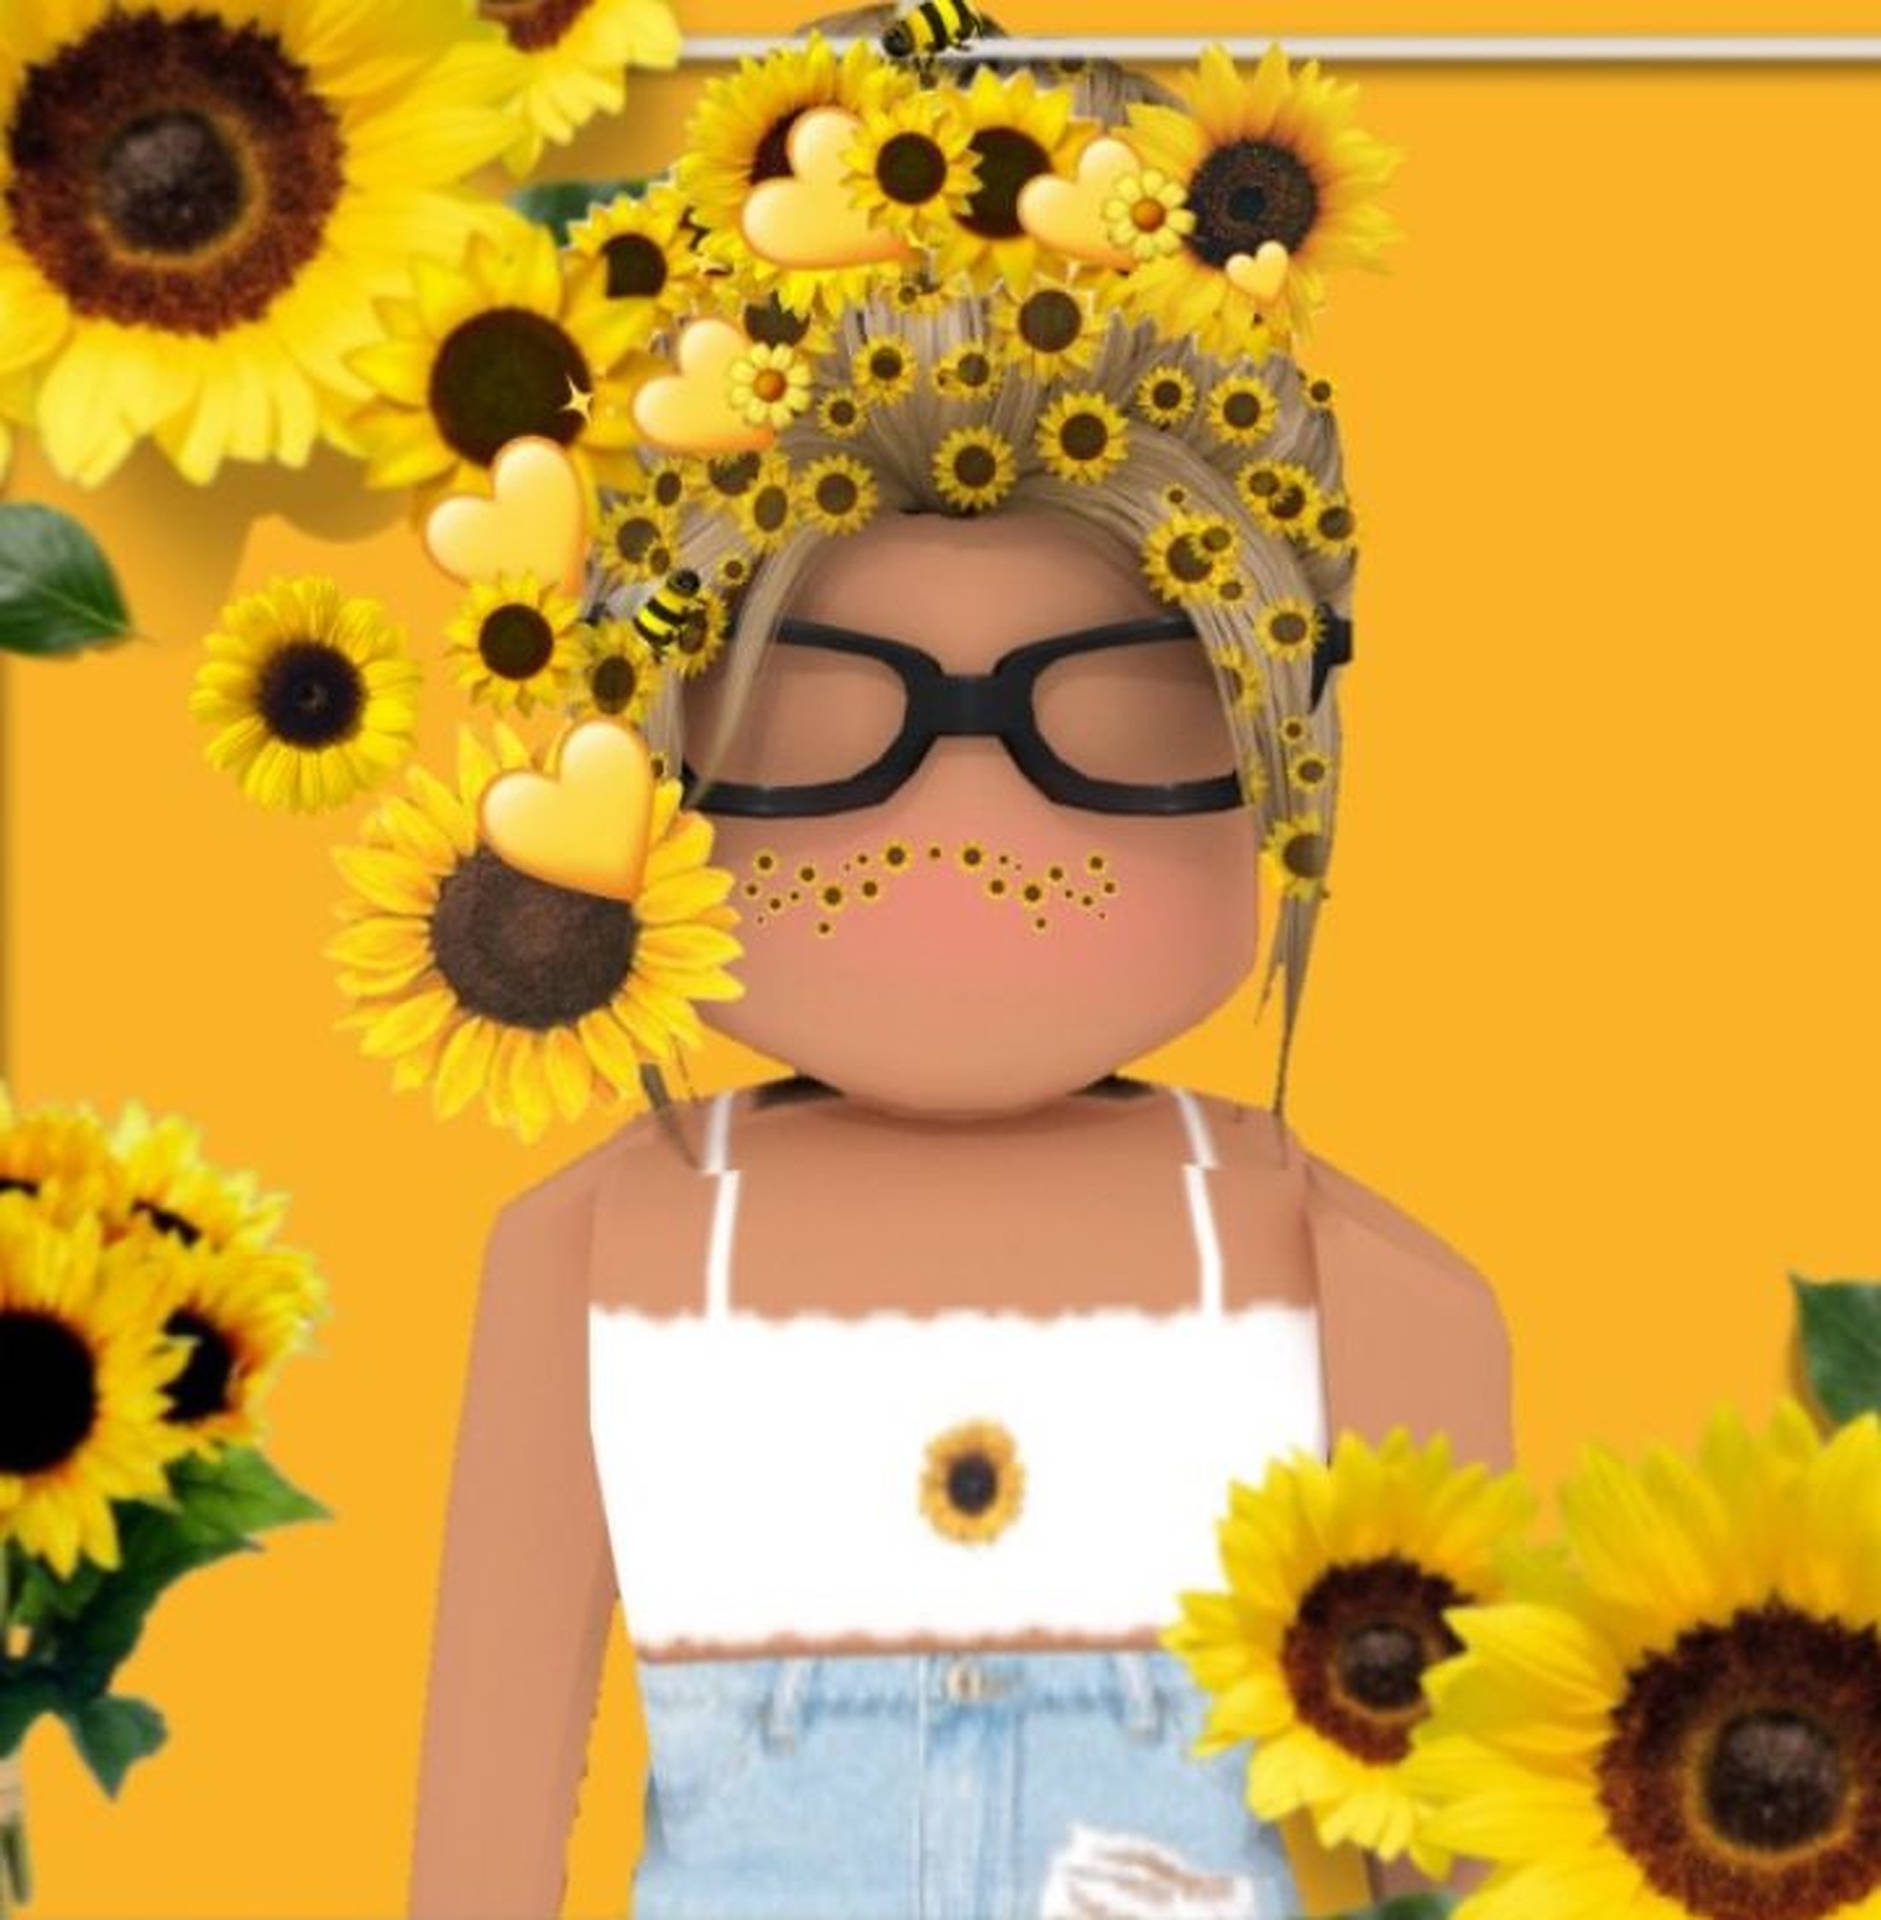 Download Preppy Roblox Sun Flower Wallpaper